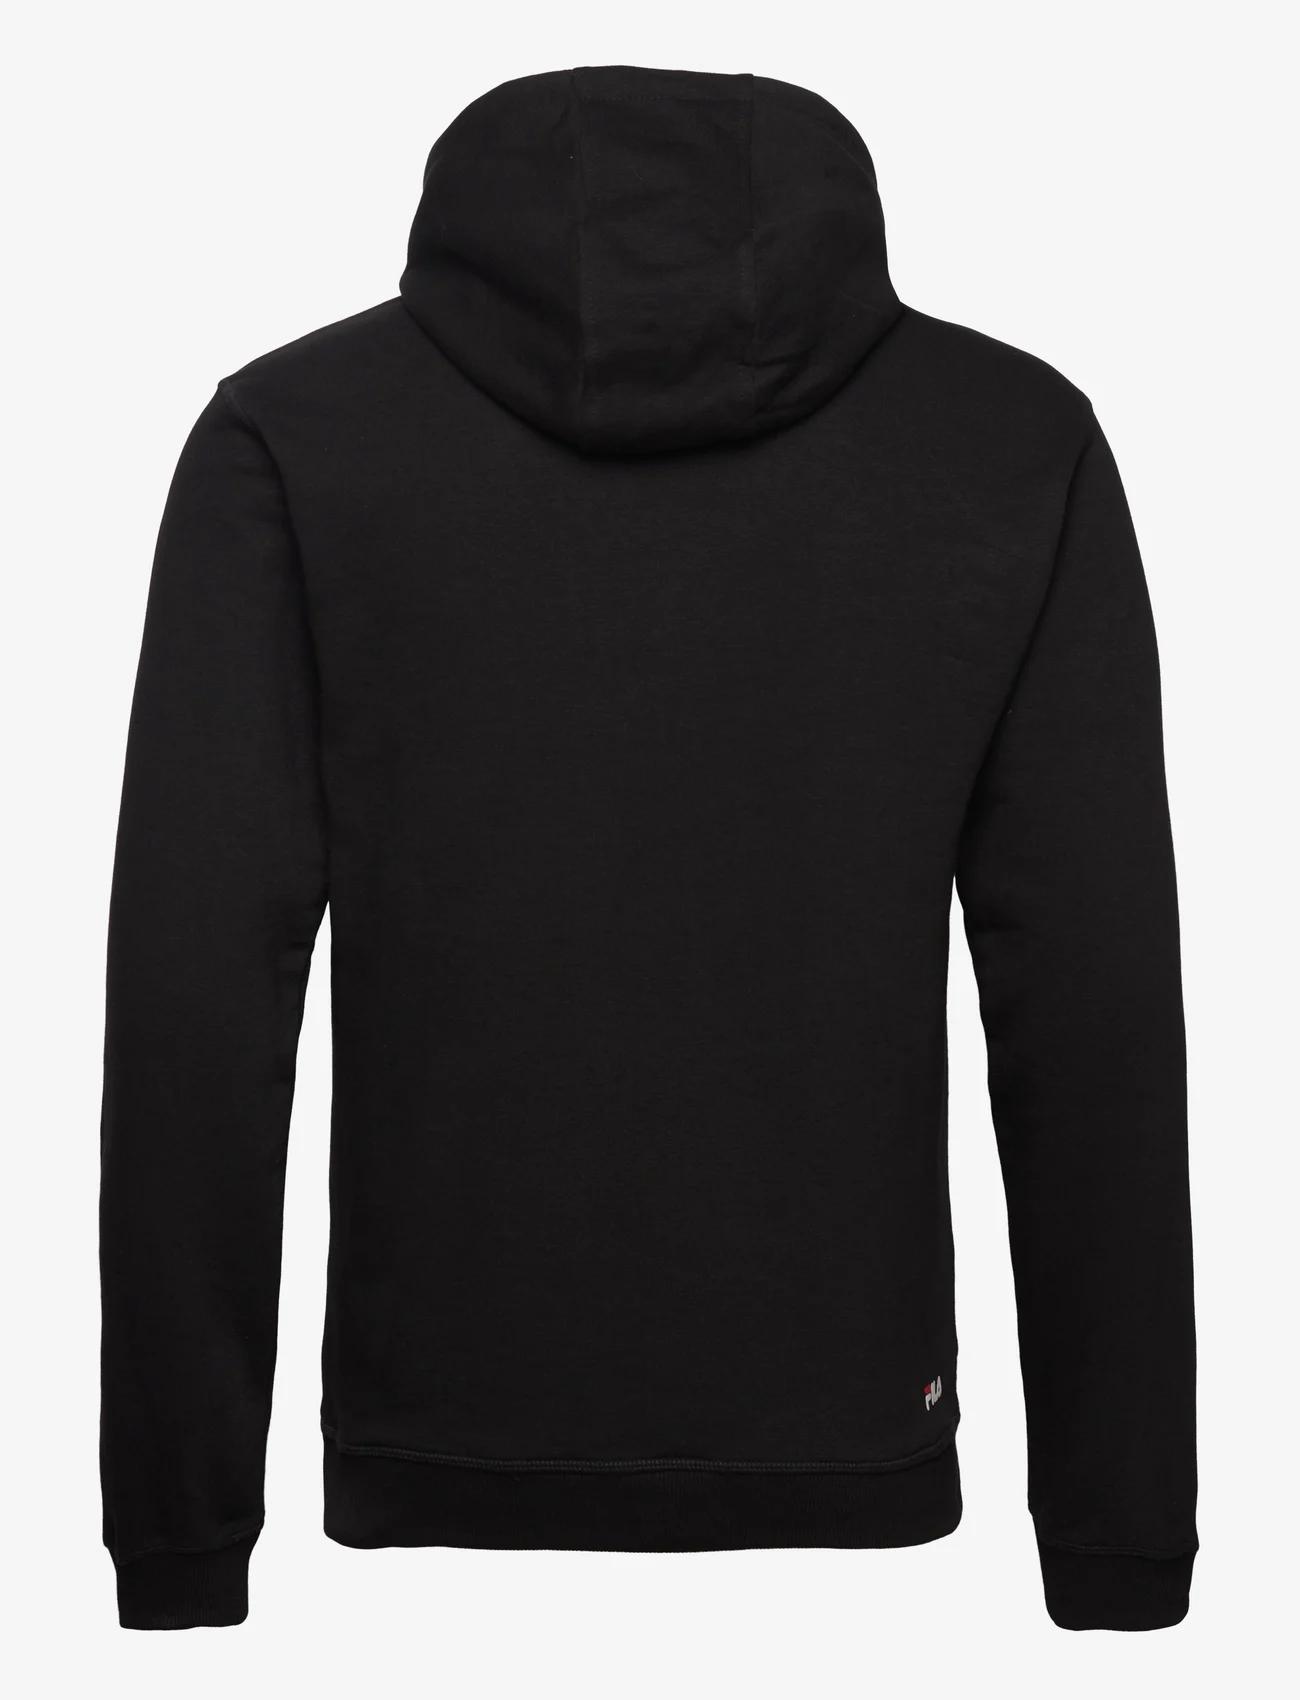 FILA - BARUMINI hoody - hoodies - black - 1